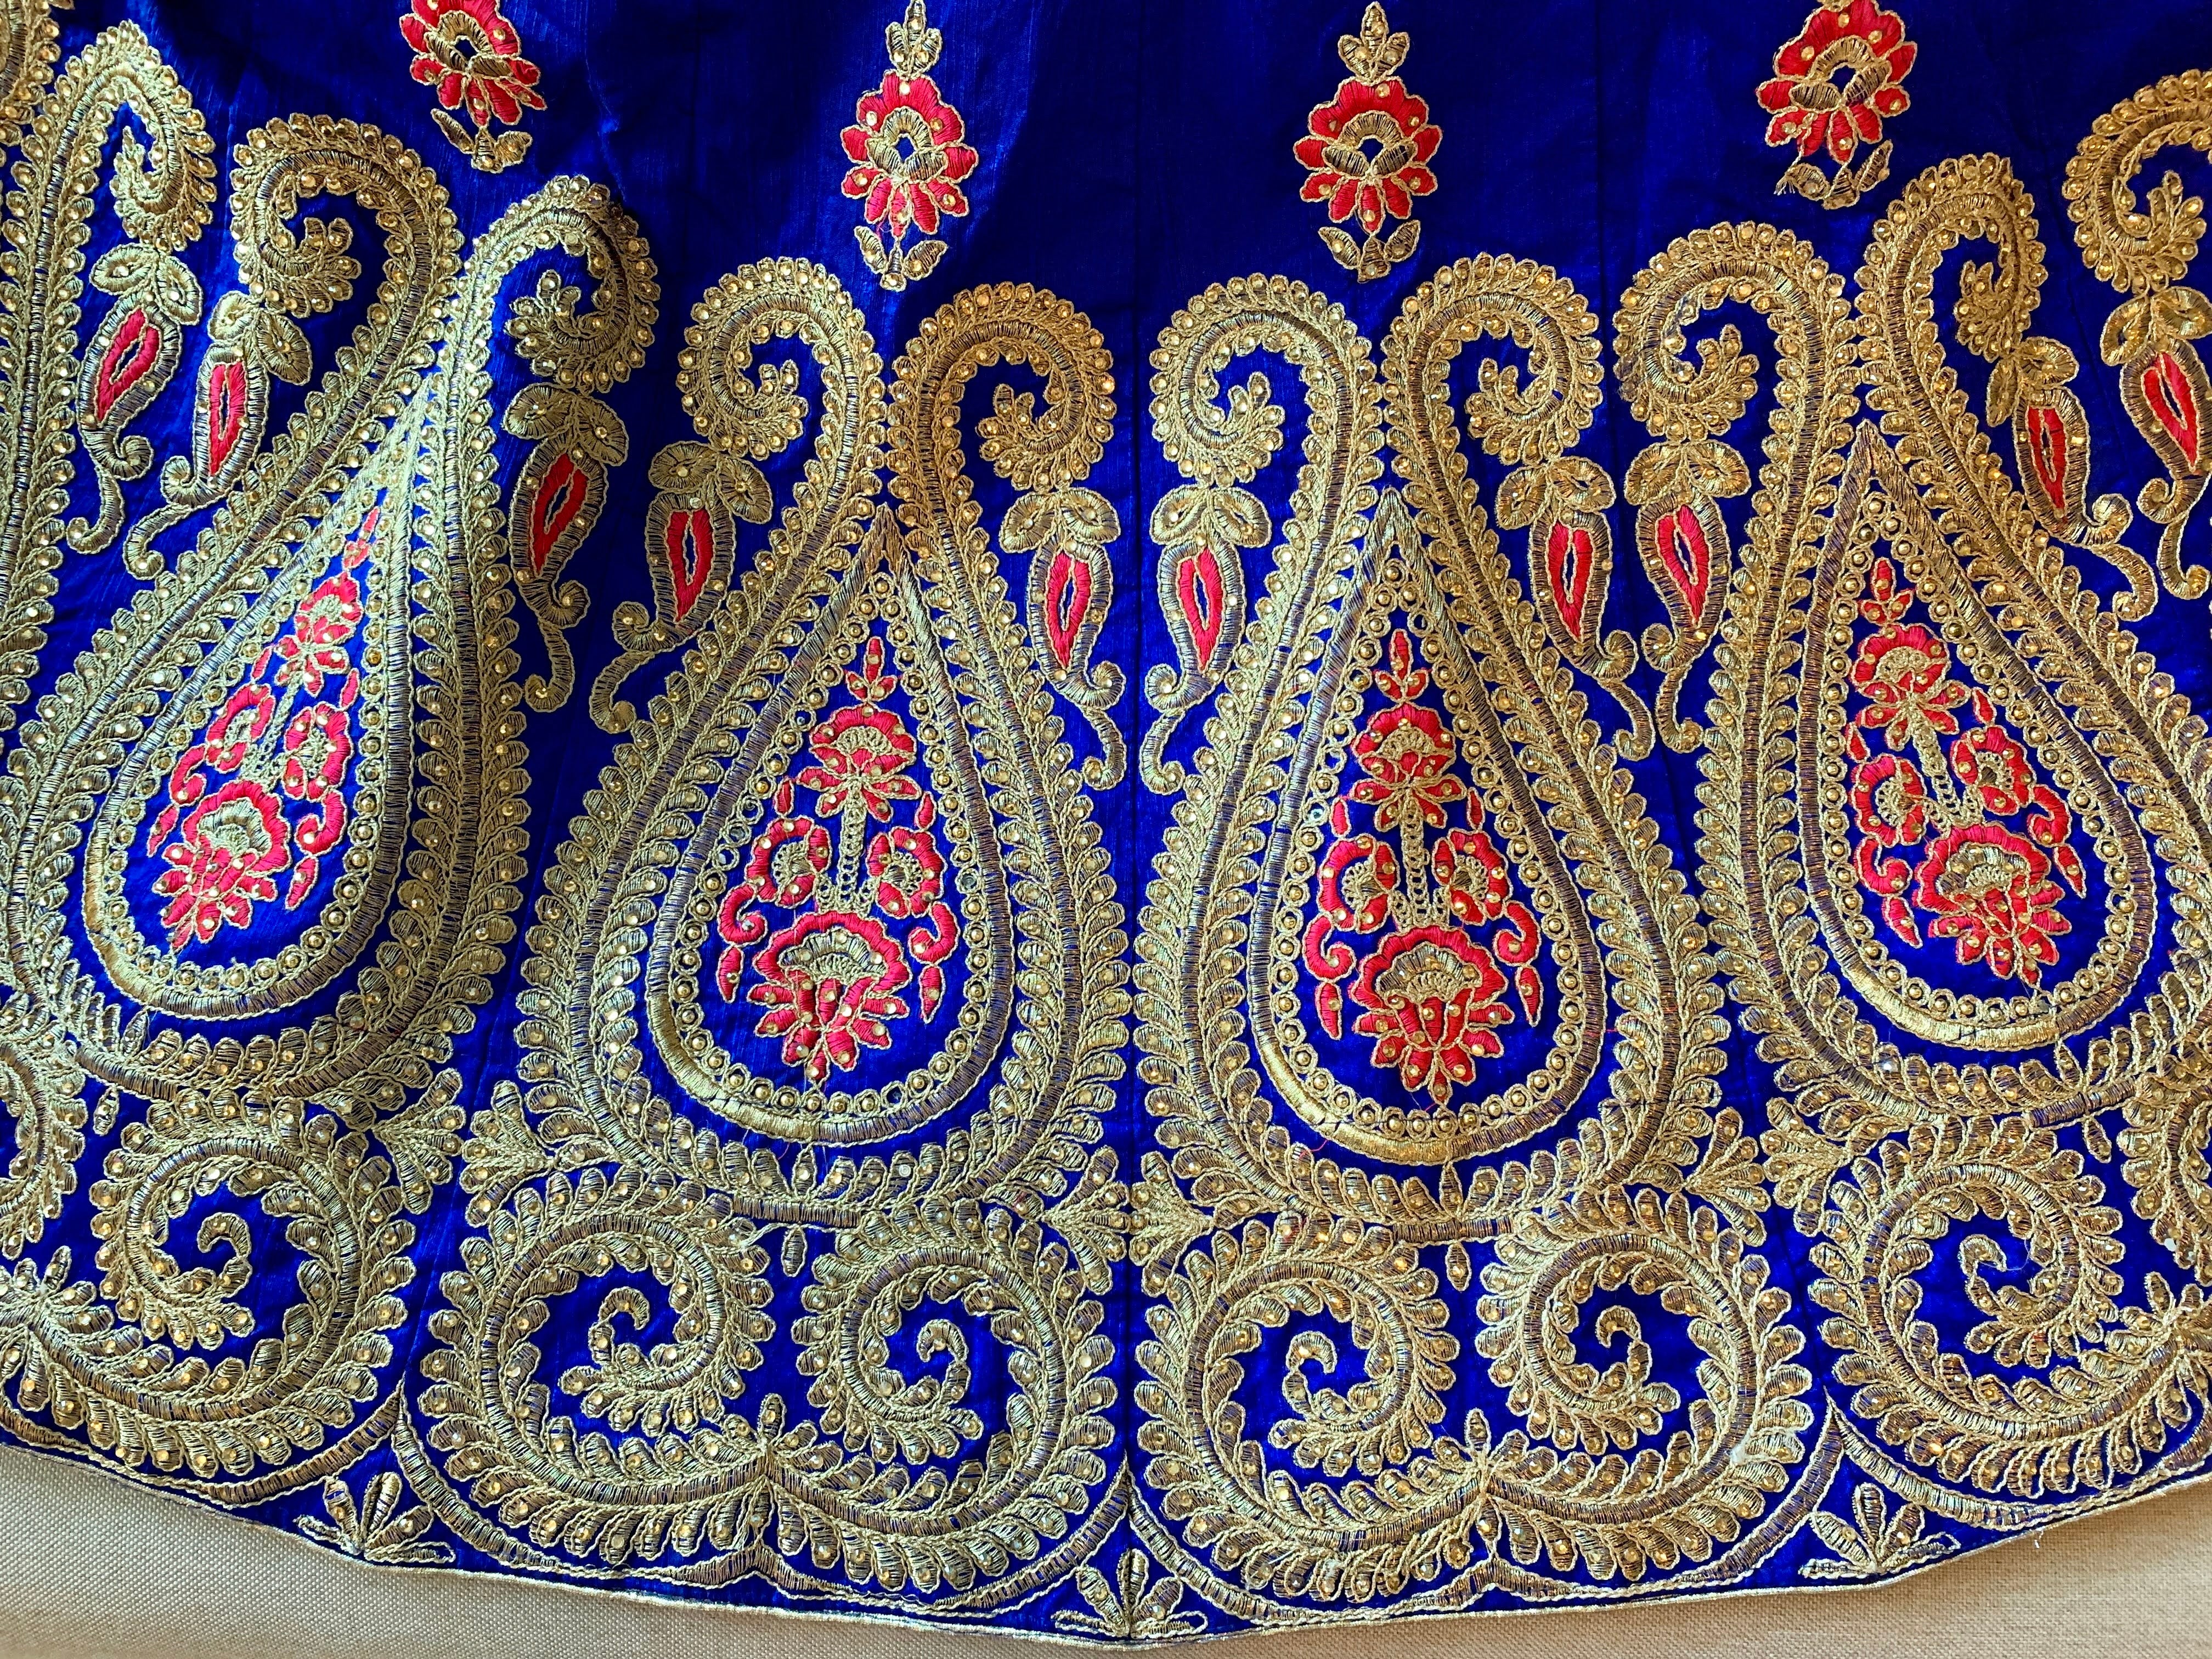 Blue Color - Satin Silk Jewel Studded, Embroidered - Lehenga Choli Set